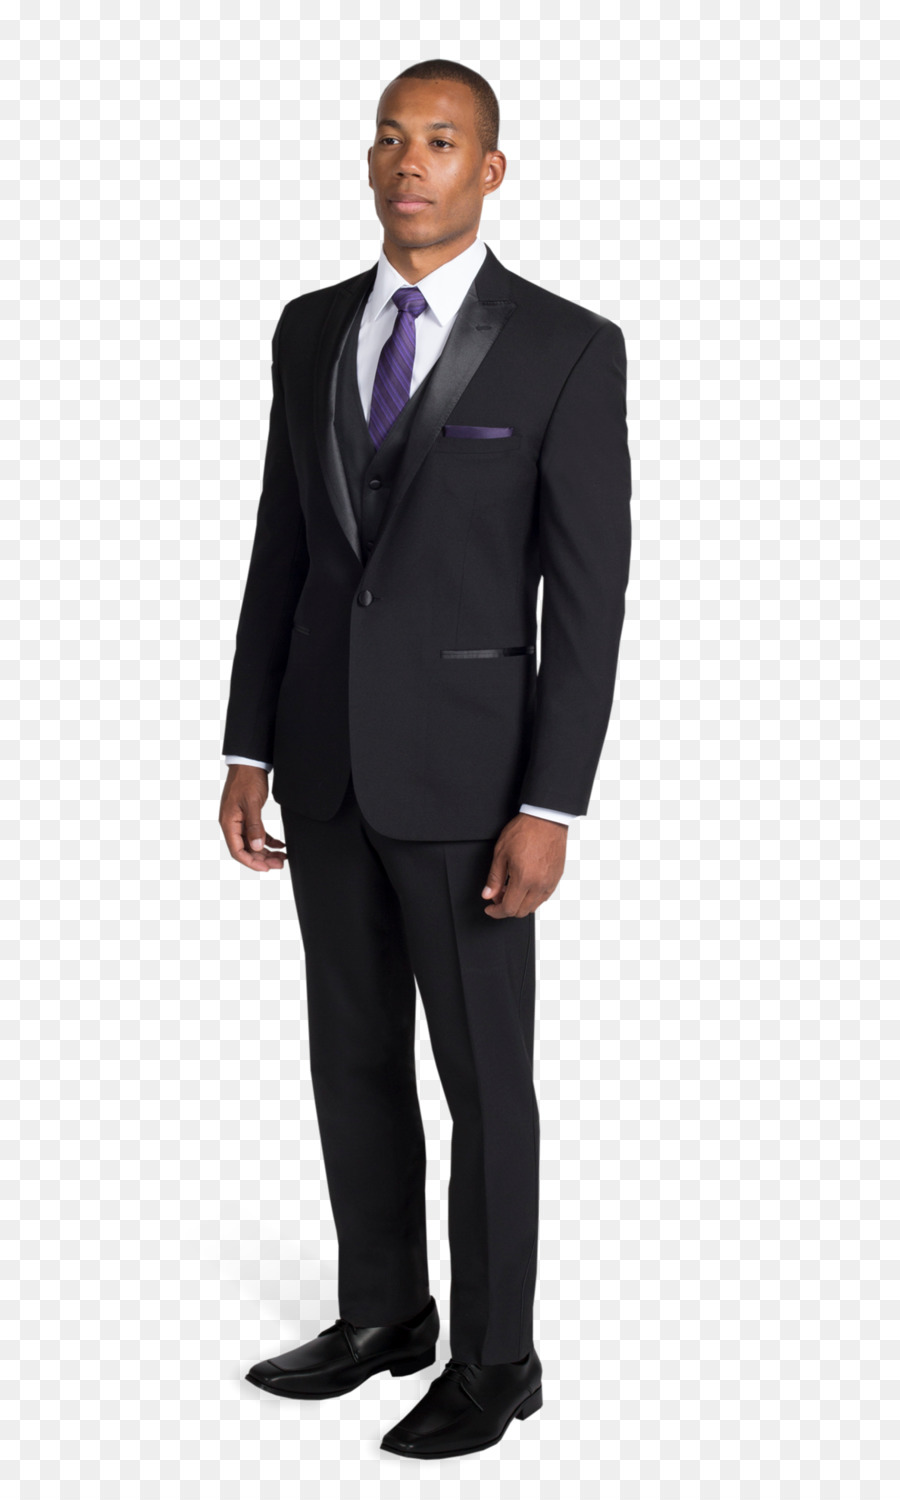 suit clipart business owner